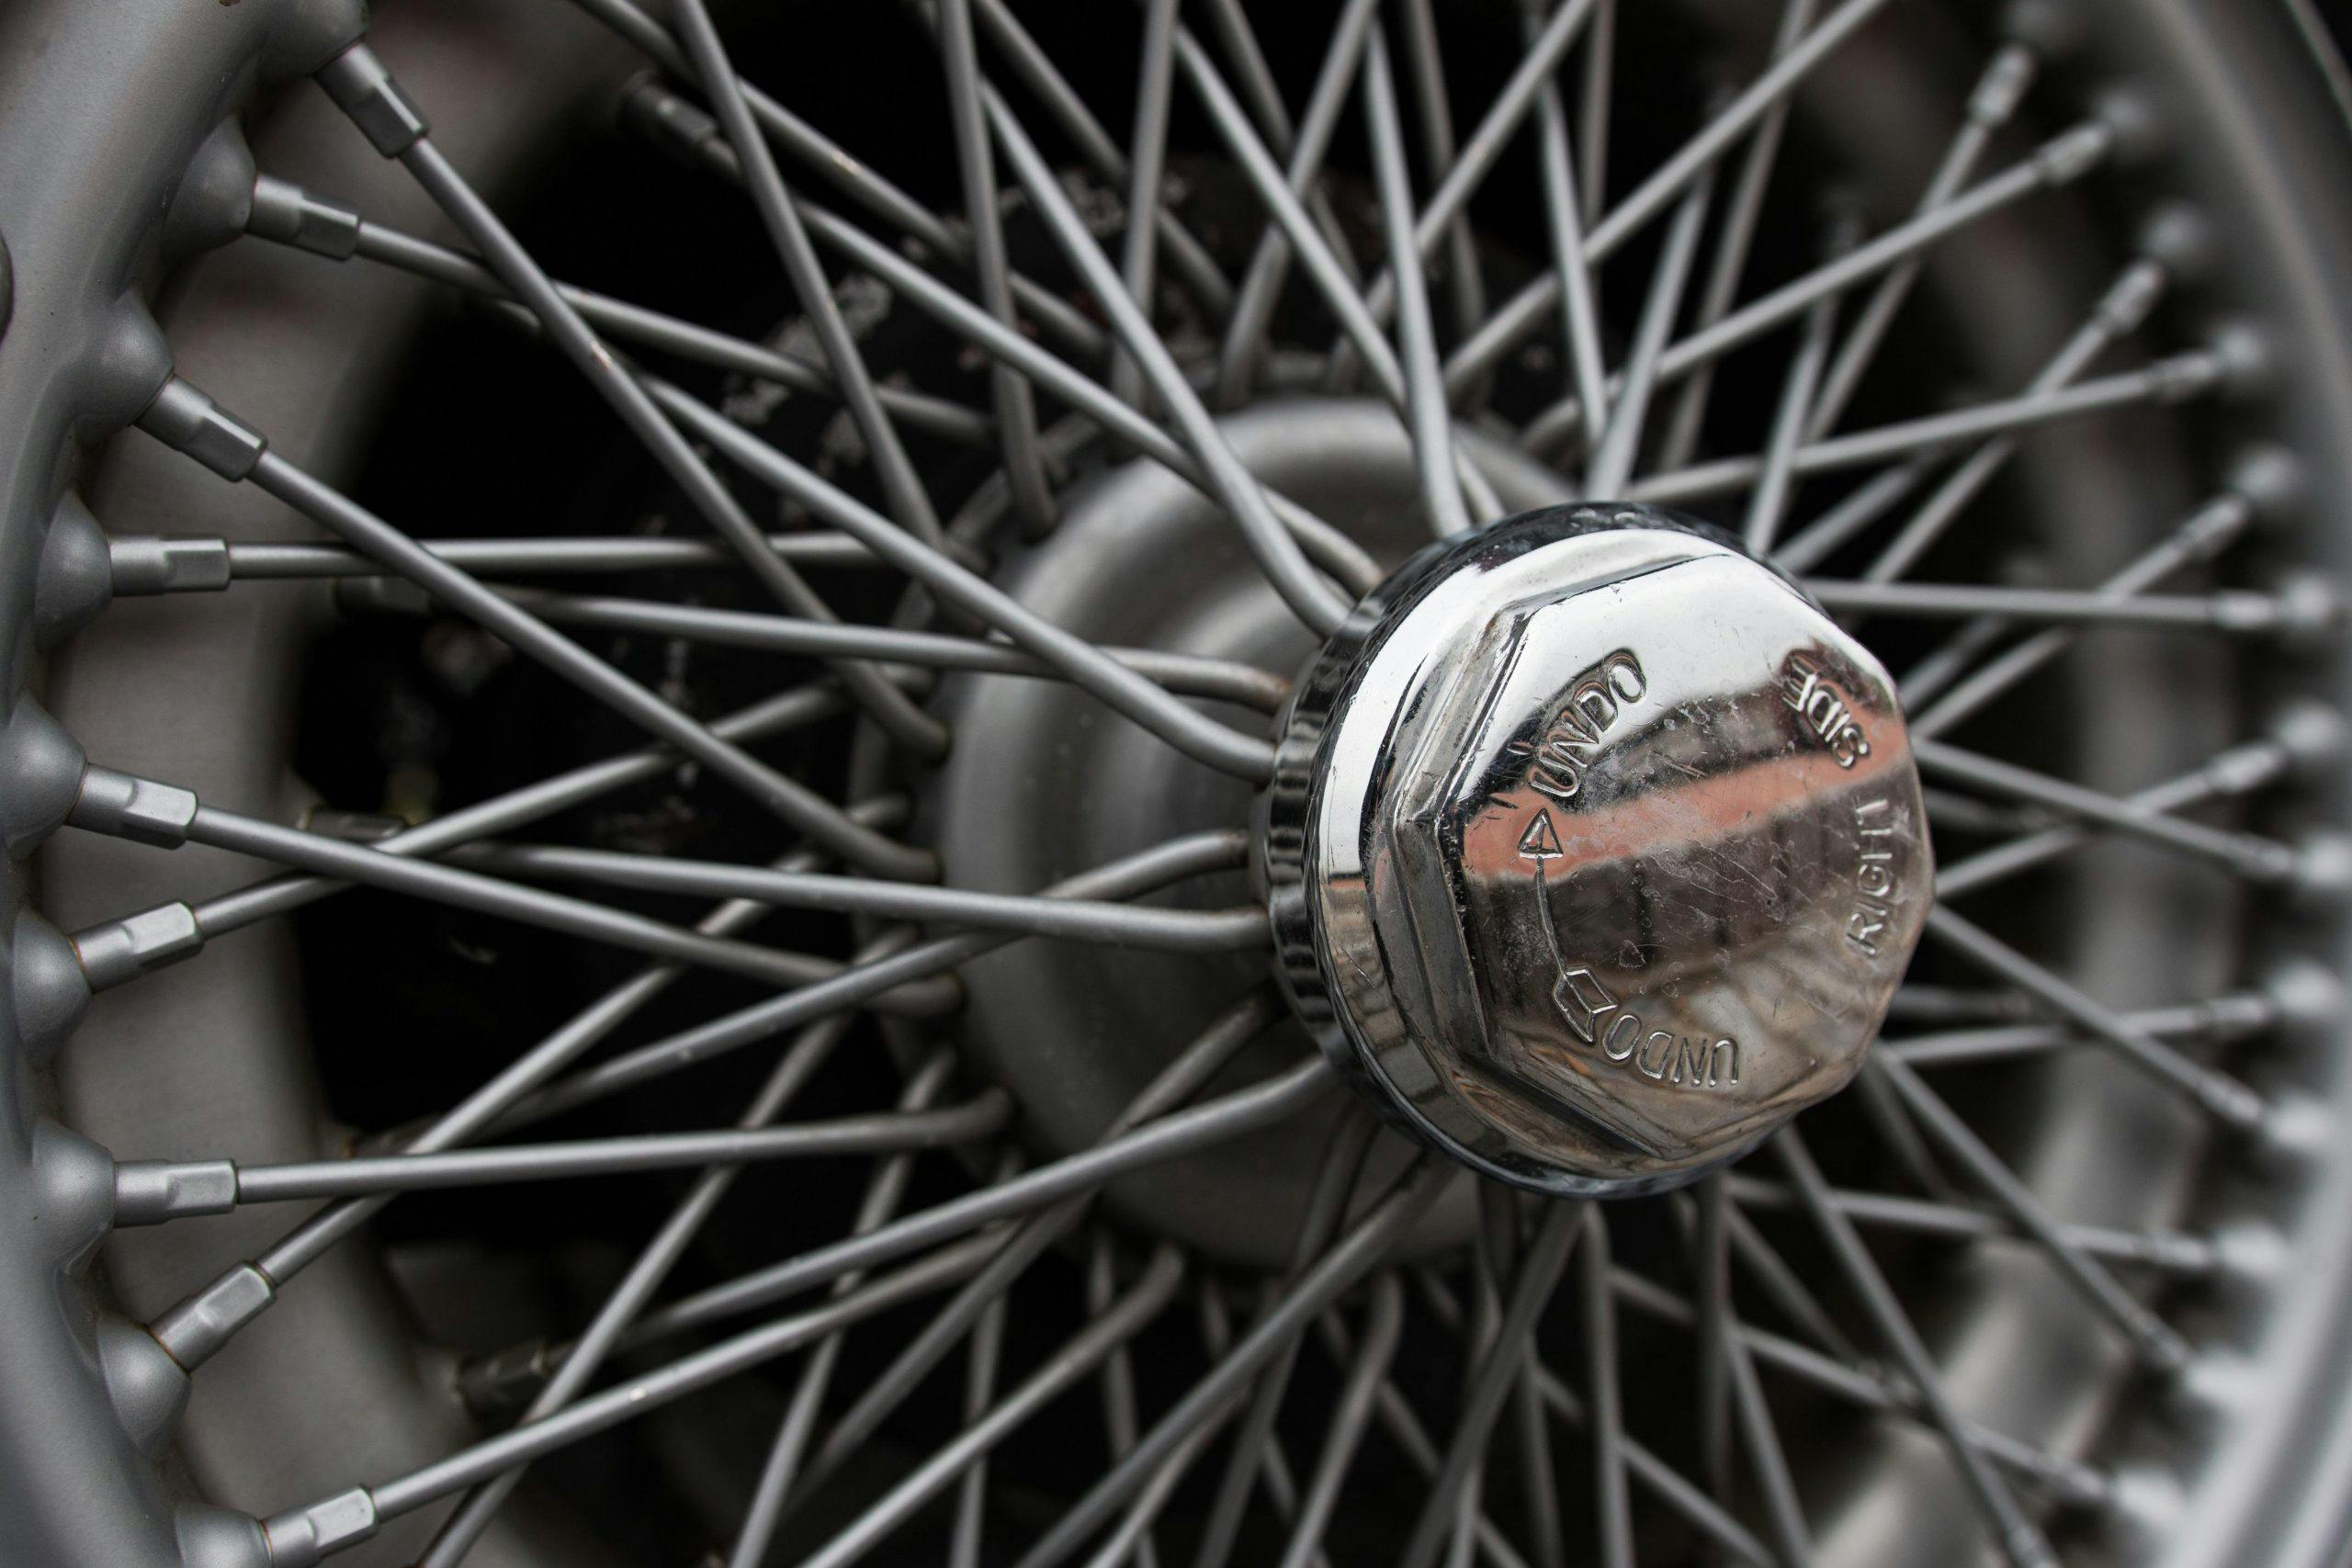 1969 MG MGC wheel spokes and hub detail